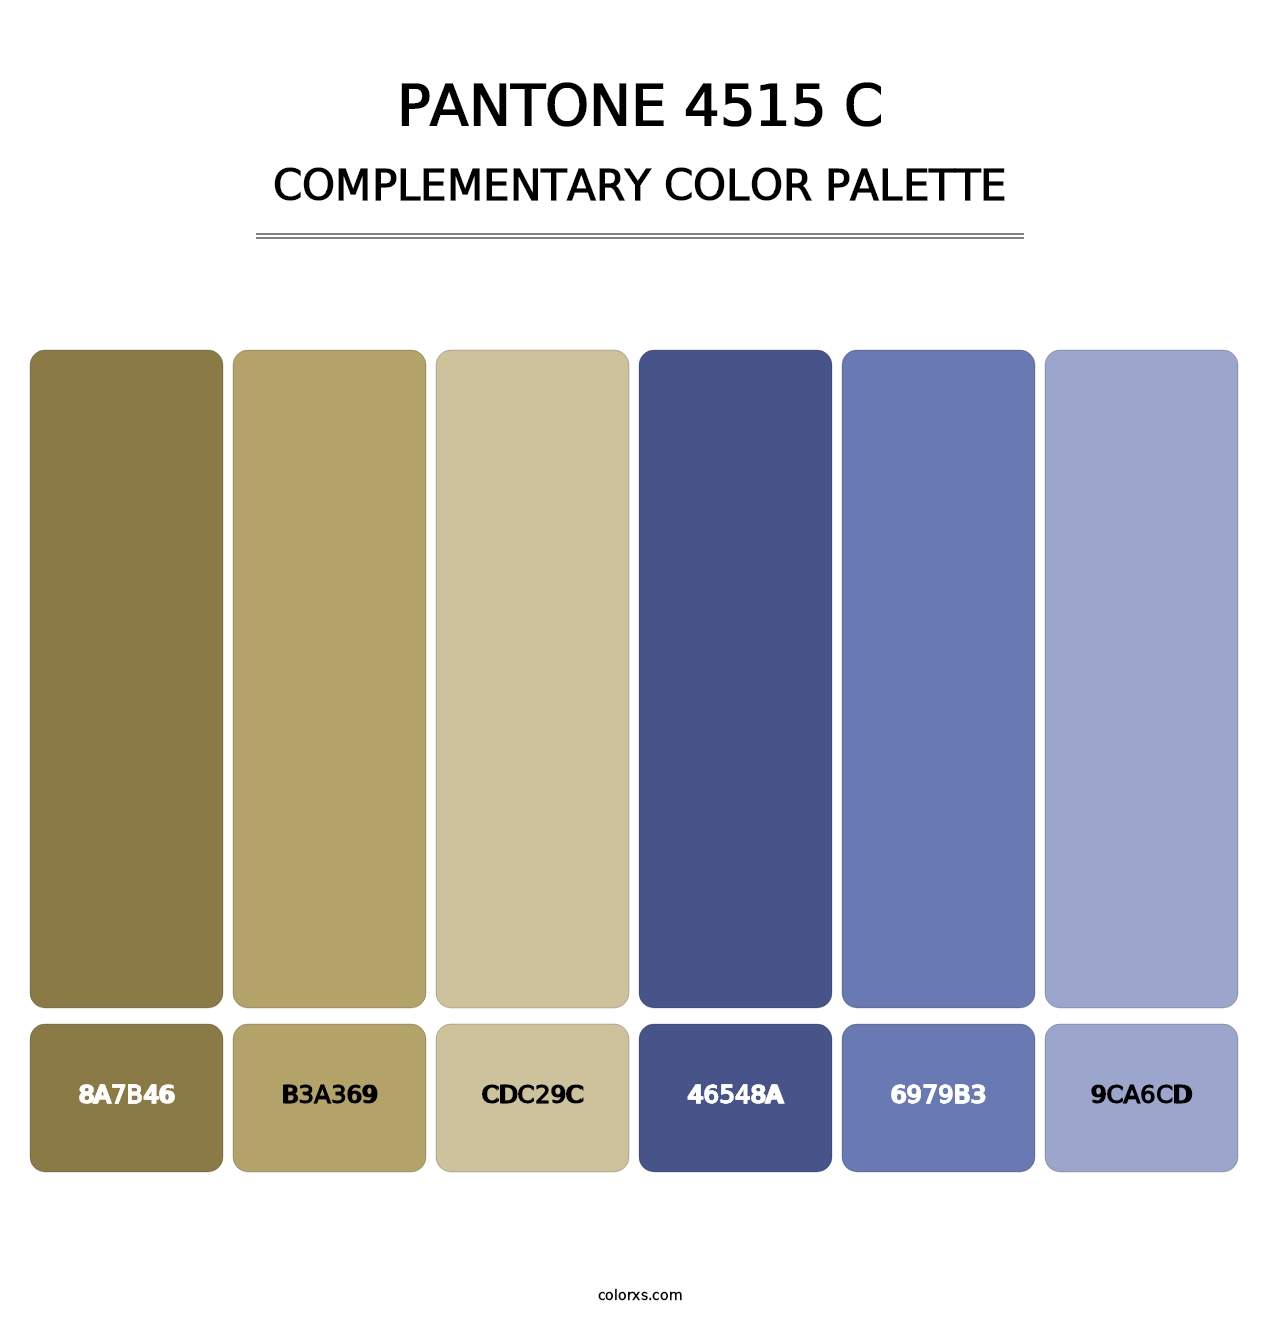 PANTONE 4515 C - Complementary Color Palette